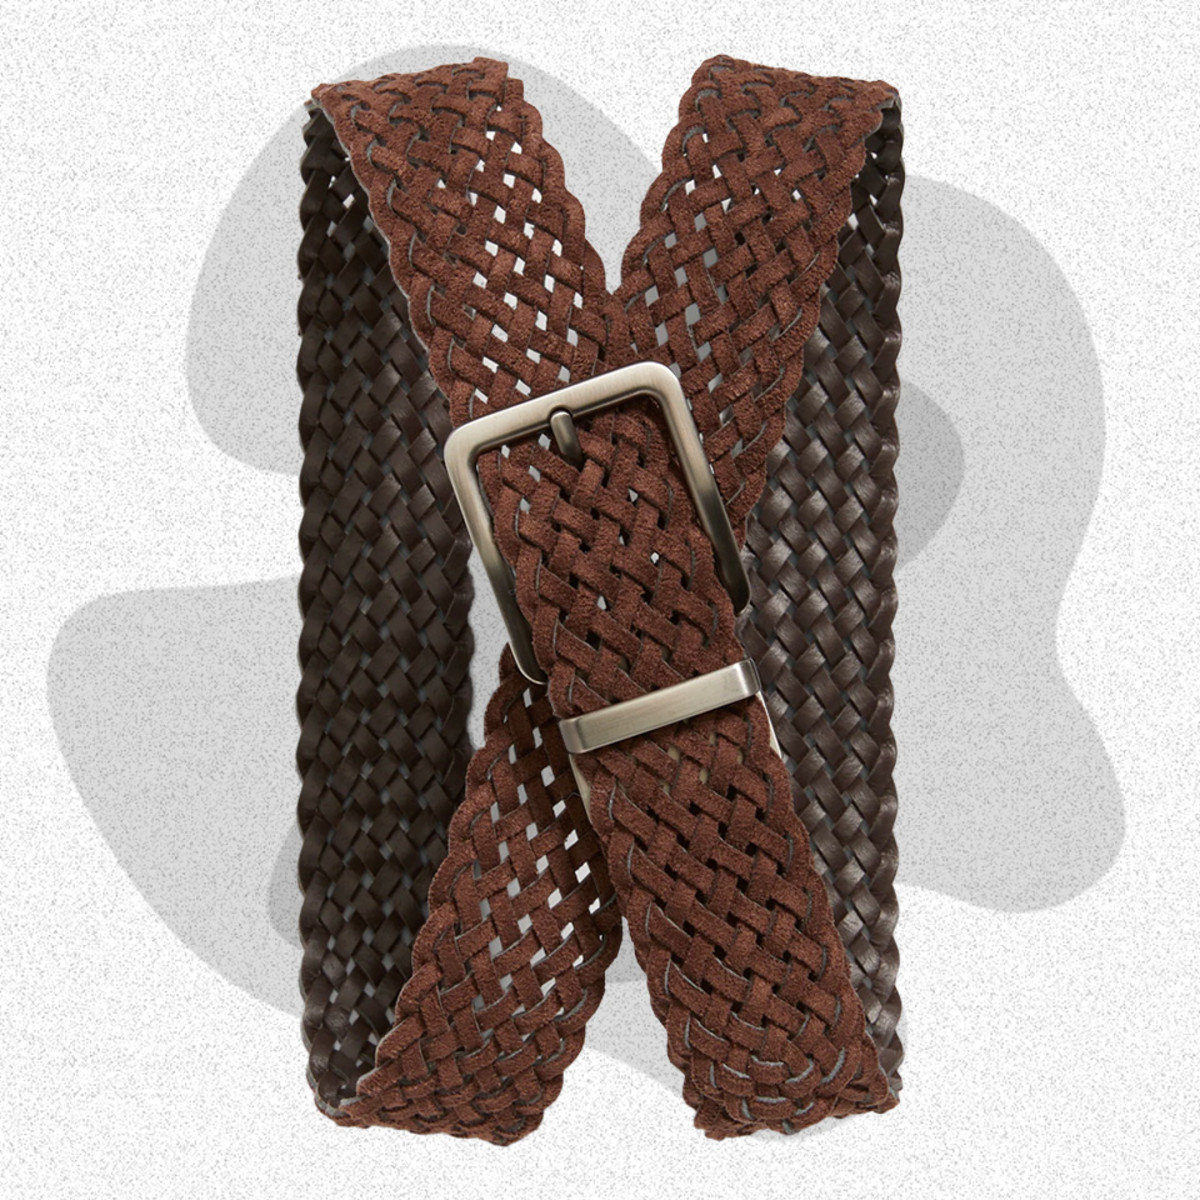 Leather Belts for Men - How to Pick the Best Belt – Obscure Belts